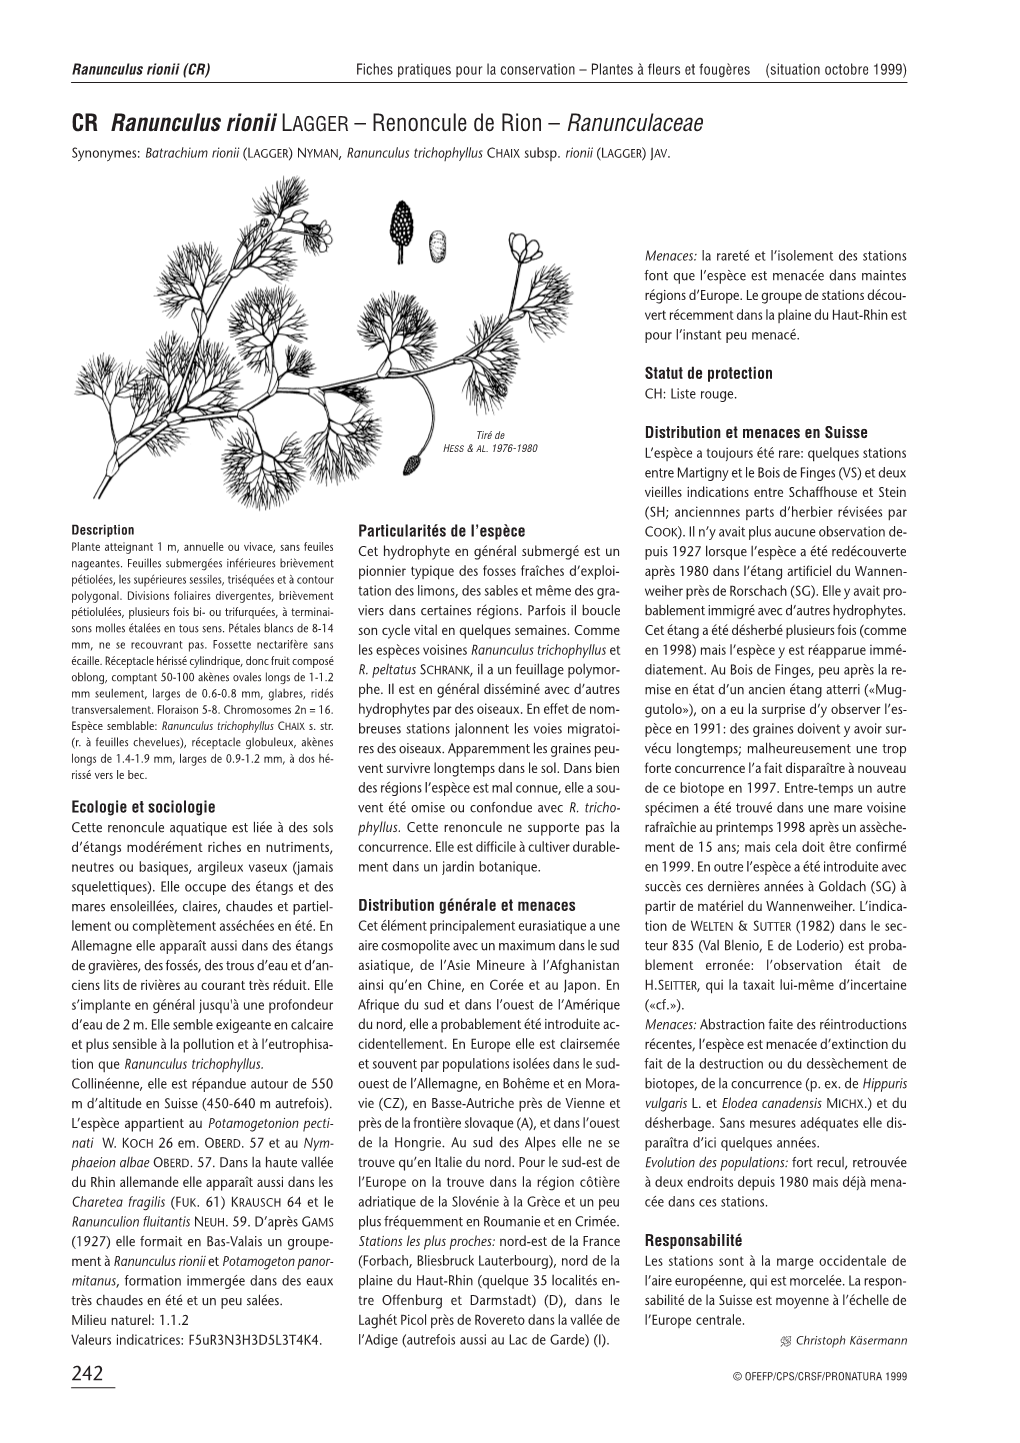 CR Ranunculus Rionii LAGGER – Renoncule De Rion – Ranunculaceae